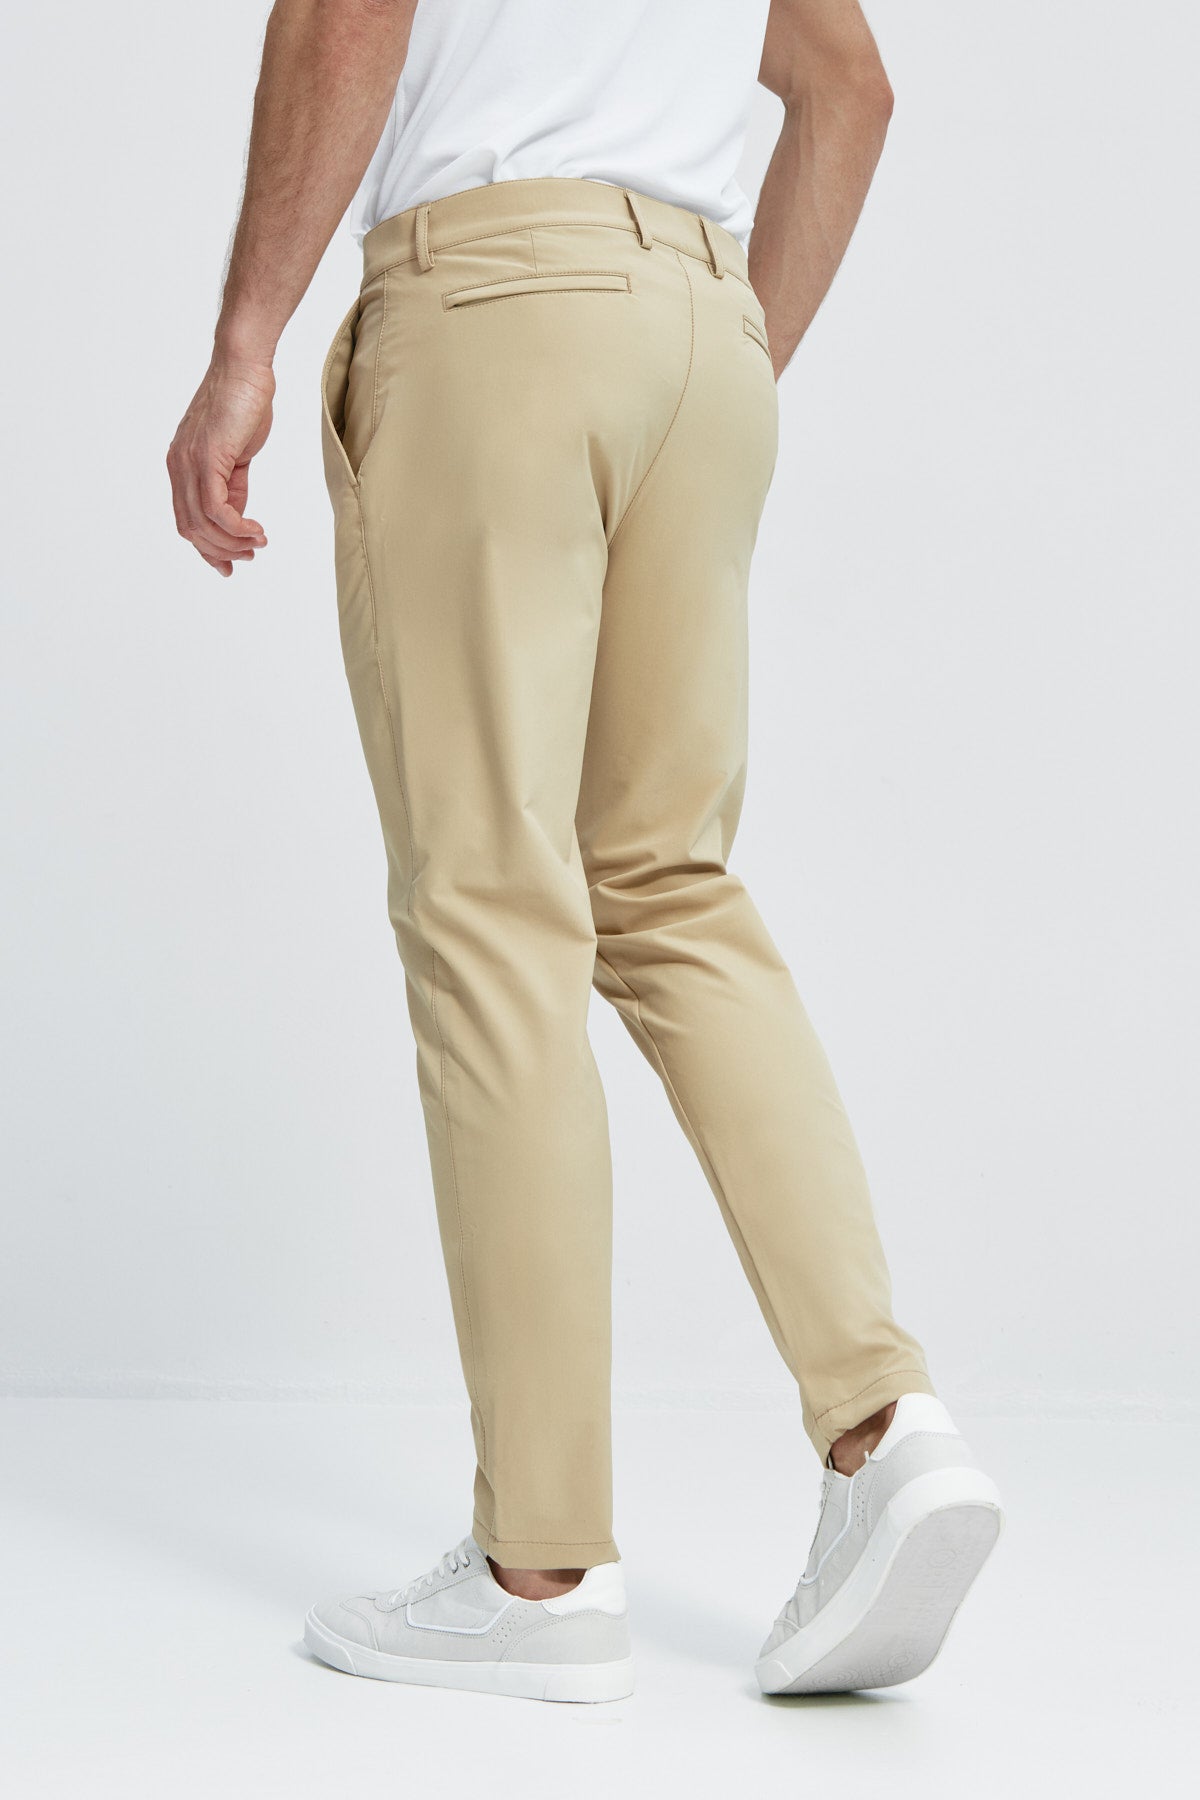 Pantalón para hombre beige: Pantalón chino slim beige para hombre con tecnología termorreguladora Coolmax. Foto de espalda.